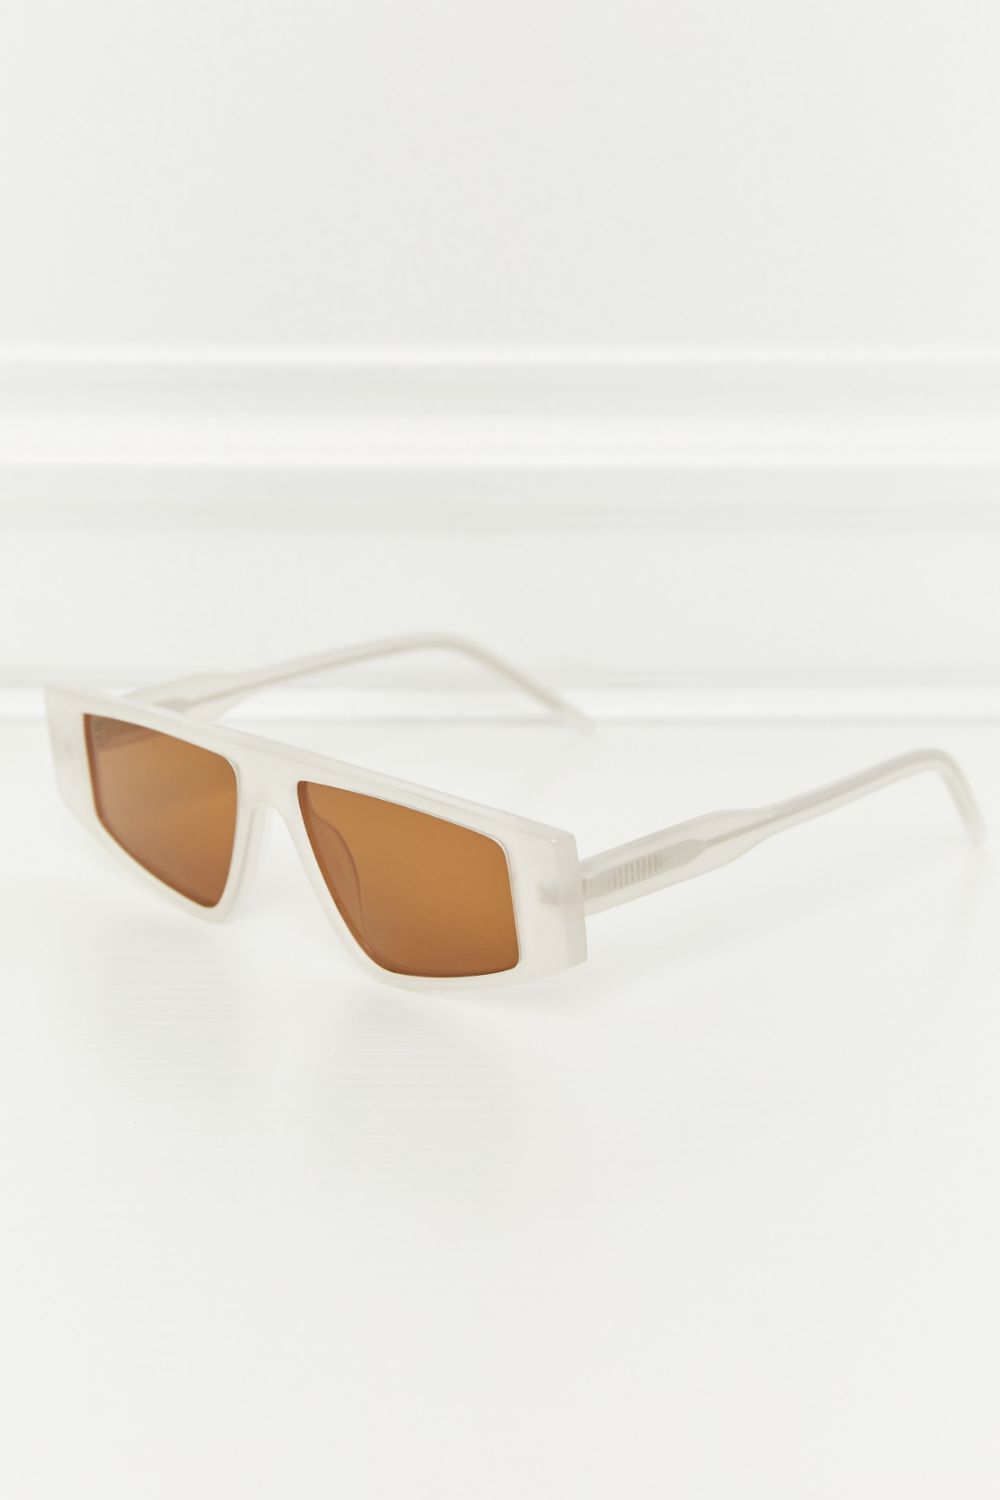 Geometric TAC Polarization Lens Sunglasses Caramel One Size Sunglasses by Vim&Vigor | Vim&Vigor Boutique